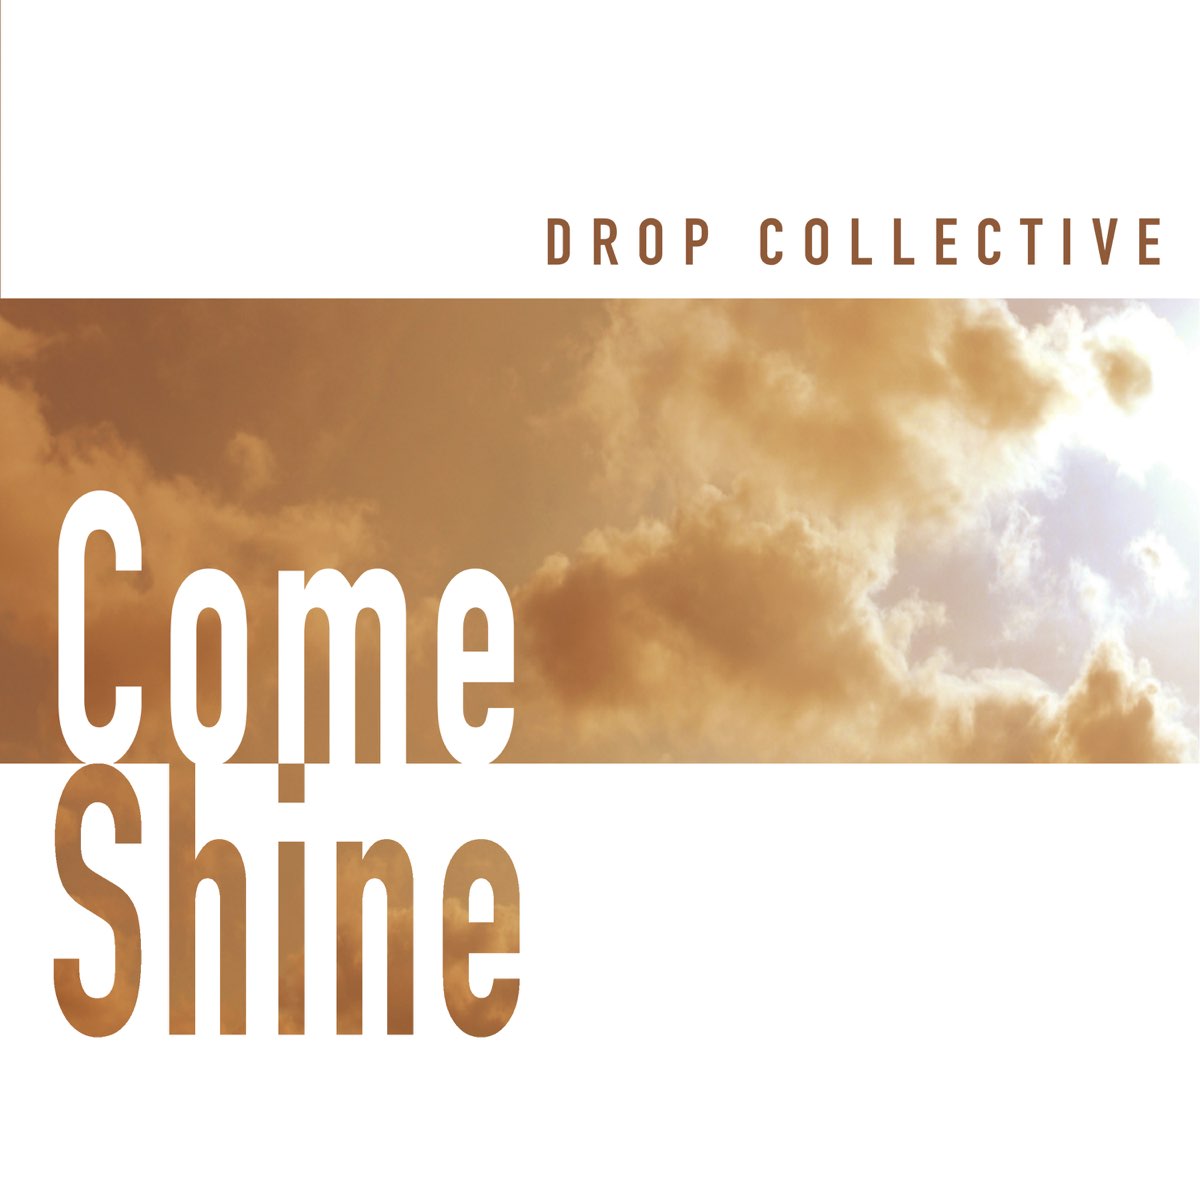 Come collection. Shine тема.